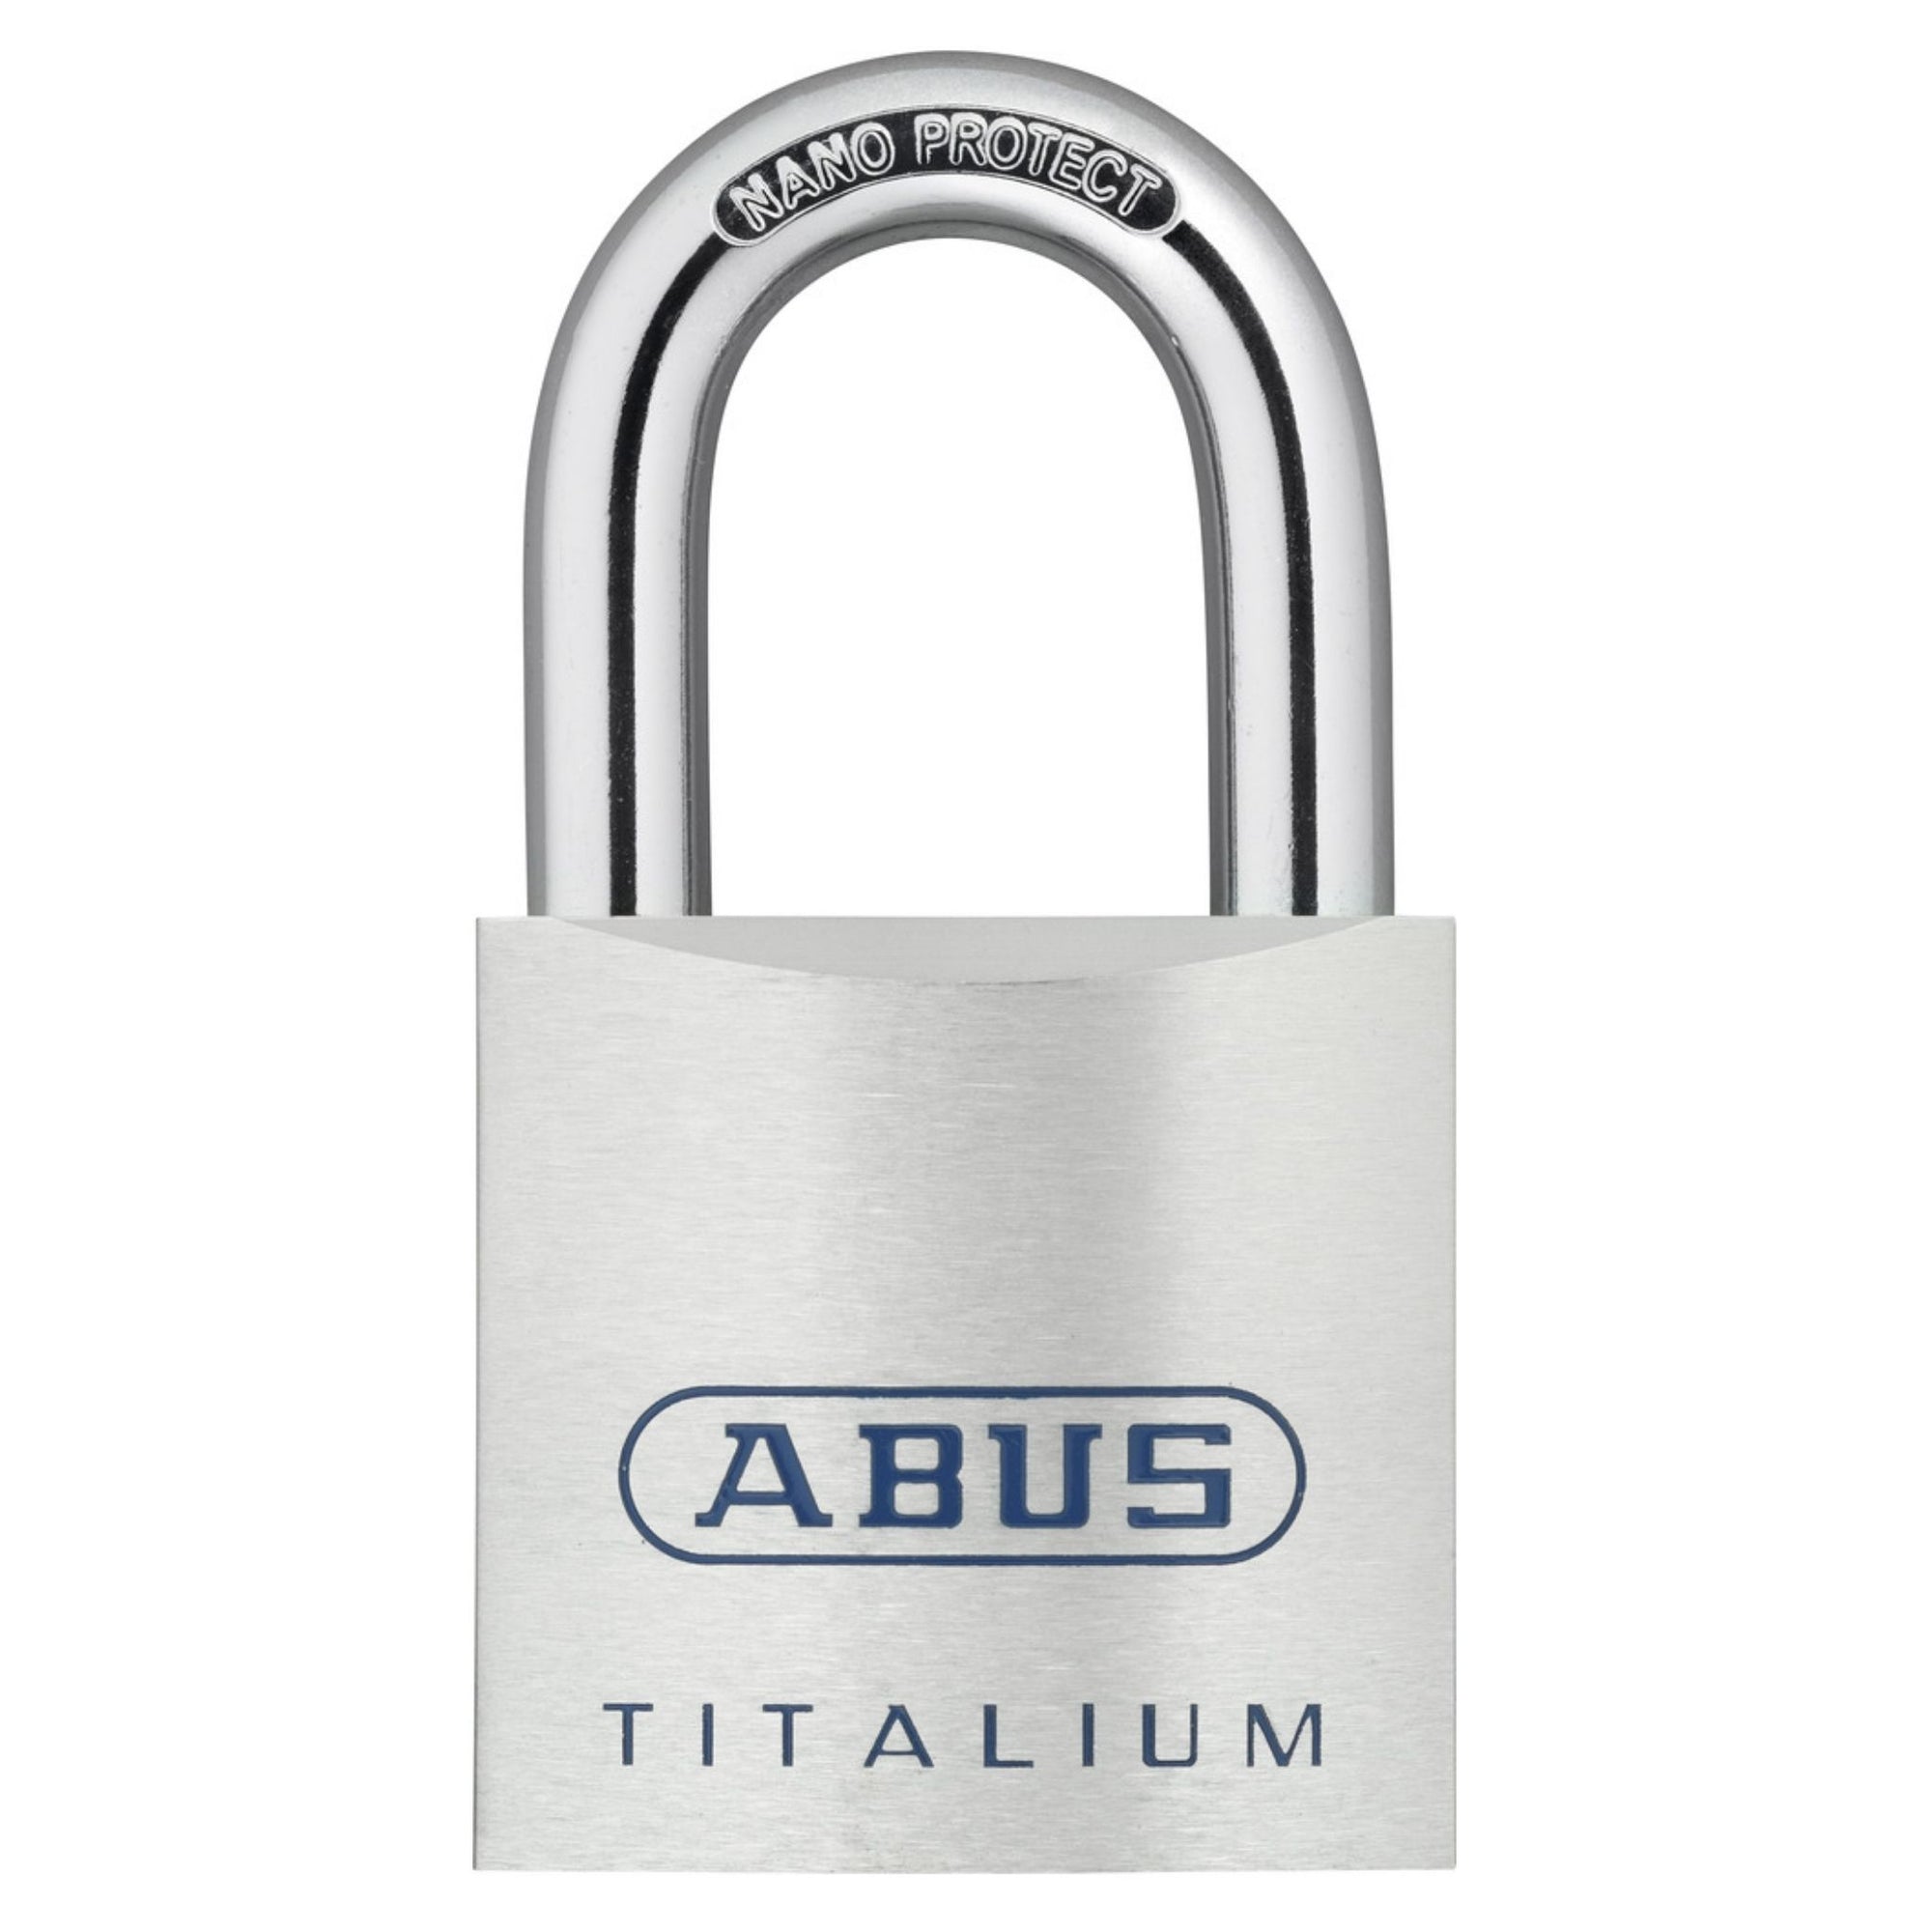 Abus 80TI/50 C KD Lock Keyed Different Titalium Padlocks Blister Pack Packaging - The Lock Source